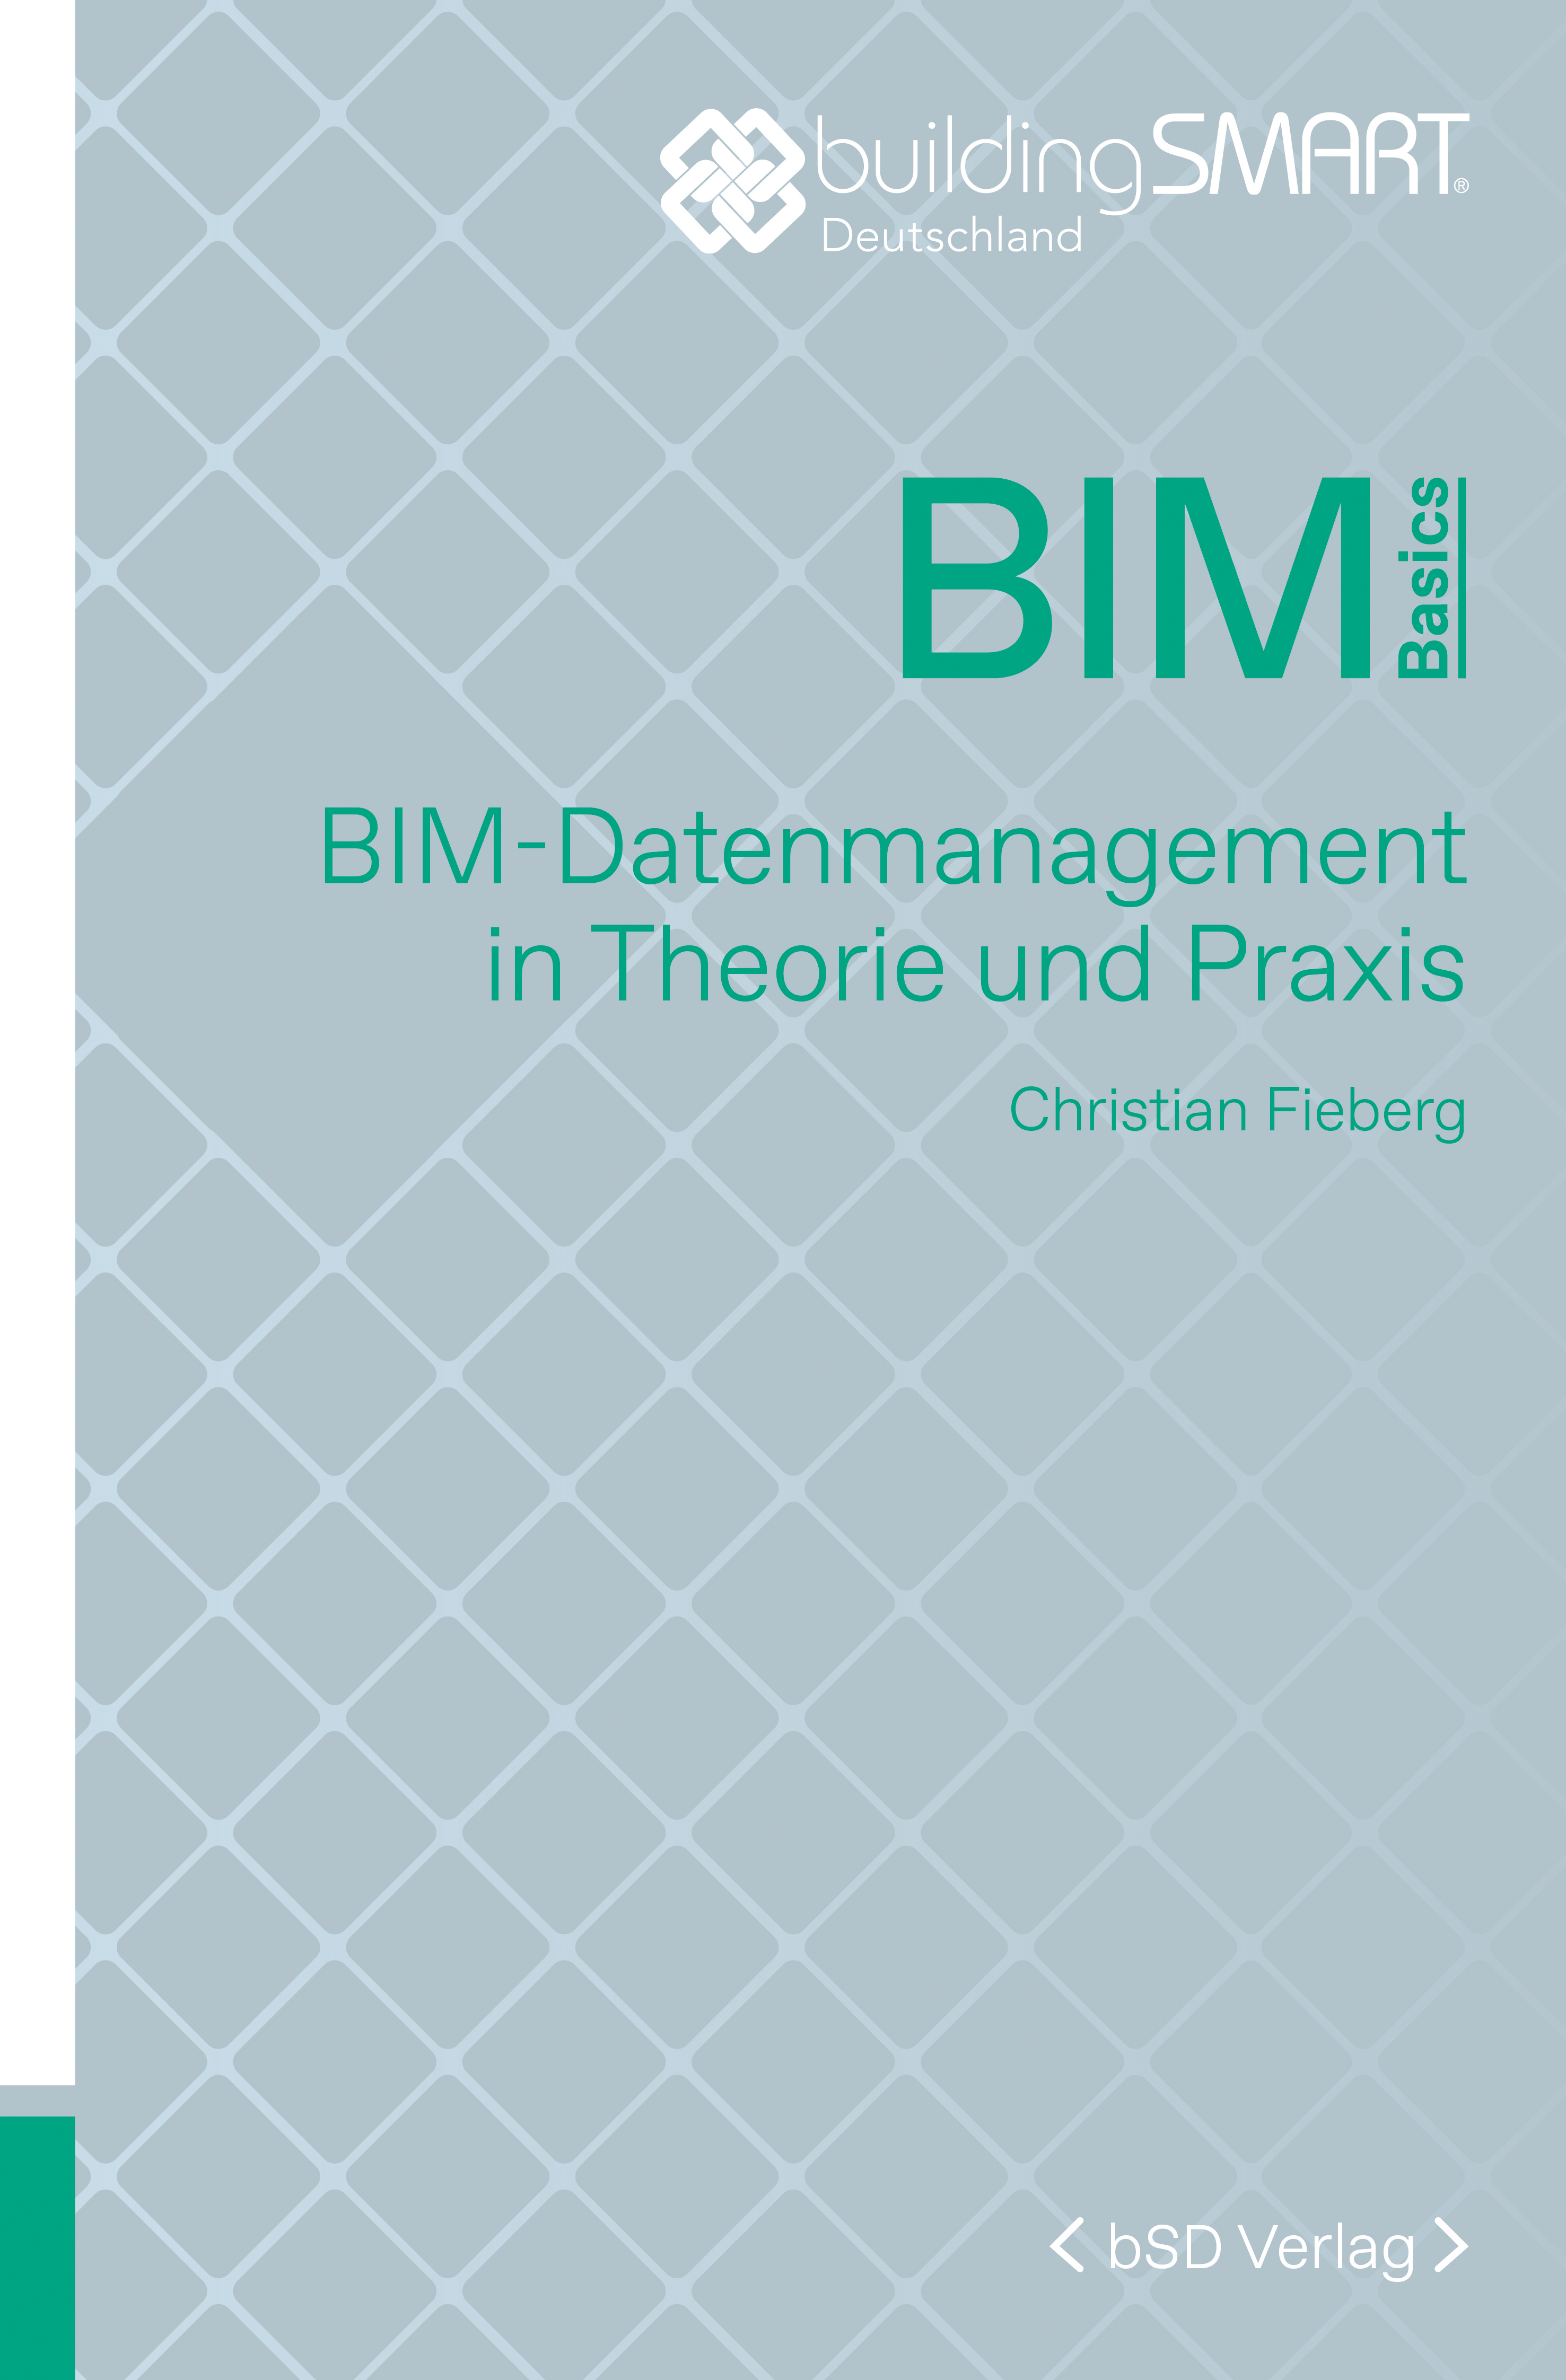 bSD Verlag/BIM Basics: BIM-Datenmanagement